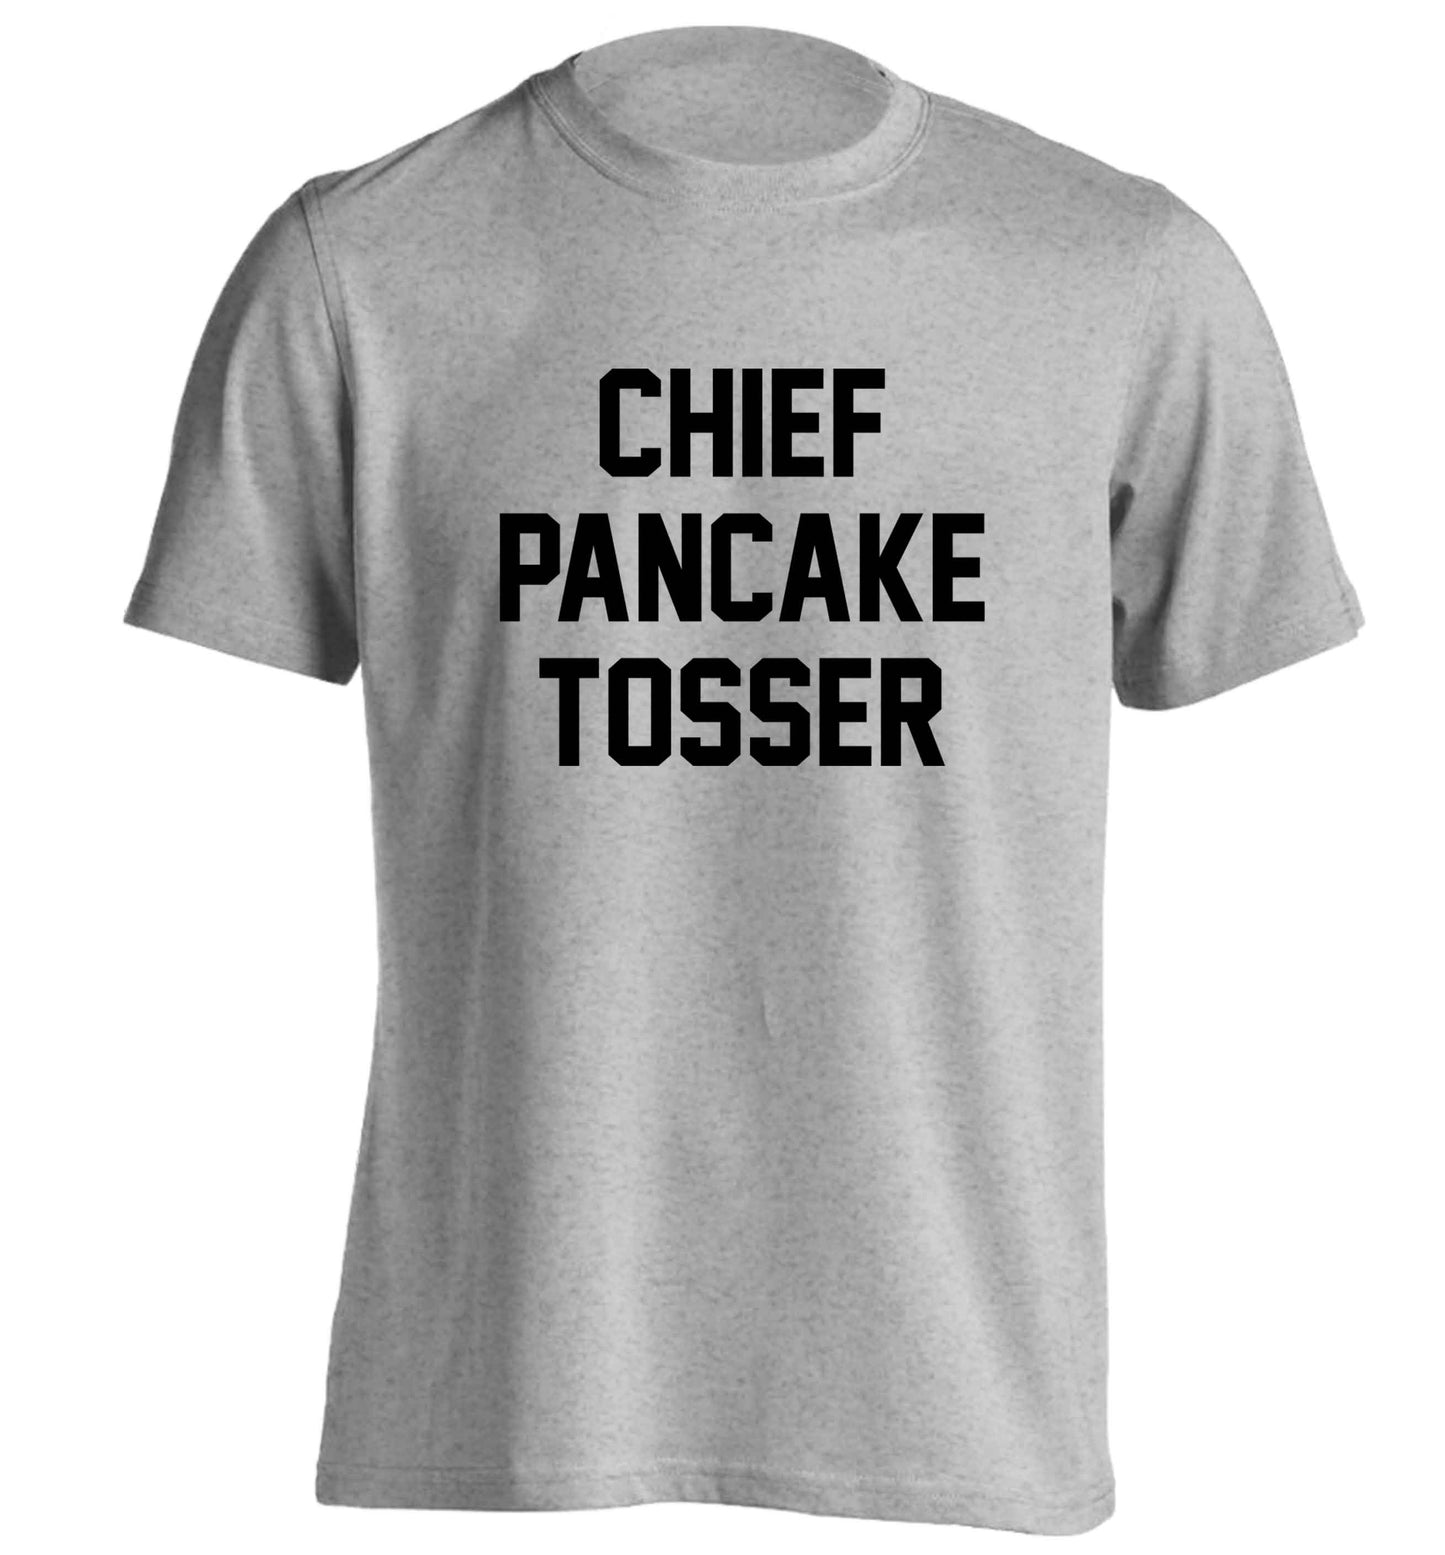 Chief pancake tosser adults unisex grey Tshirt 2XL